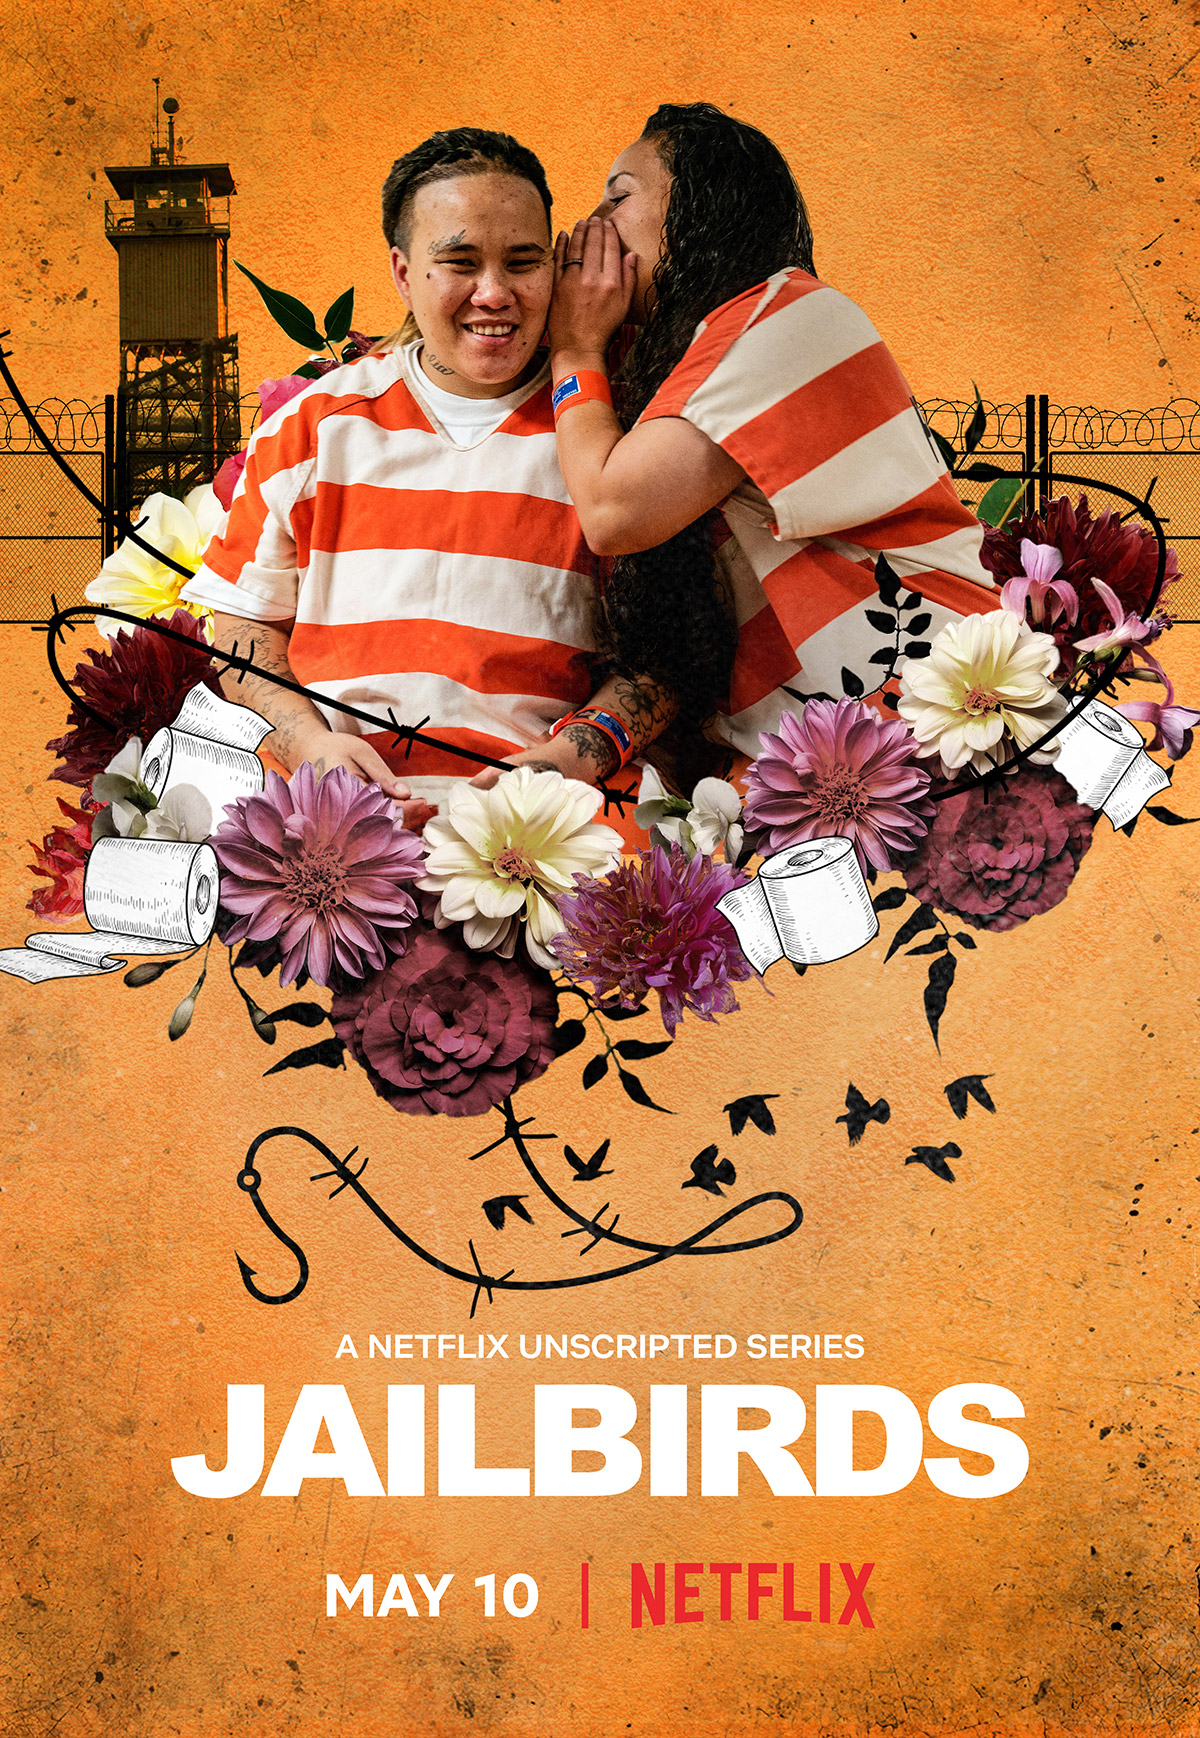 Netflix's Jailbirds